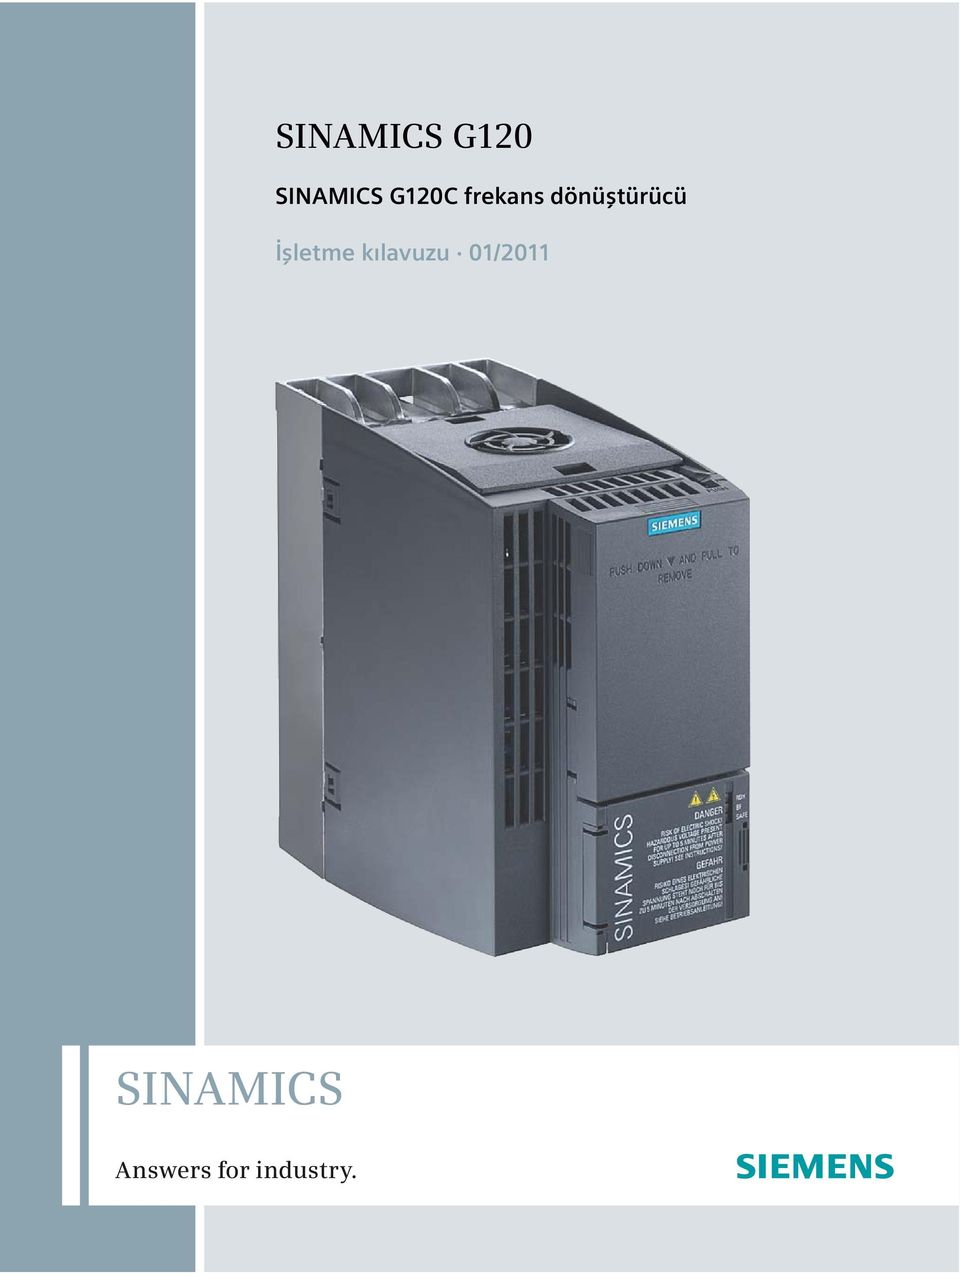 SINAMICS G120. SINAMICS G120C frekans dönüştürücü. İşletme kılavuzu 01/2011  SINAMICS. Answers for industry. - PDF Free Download